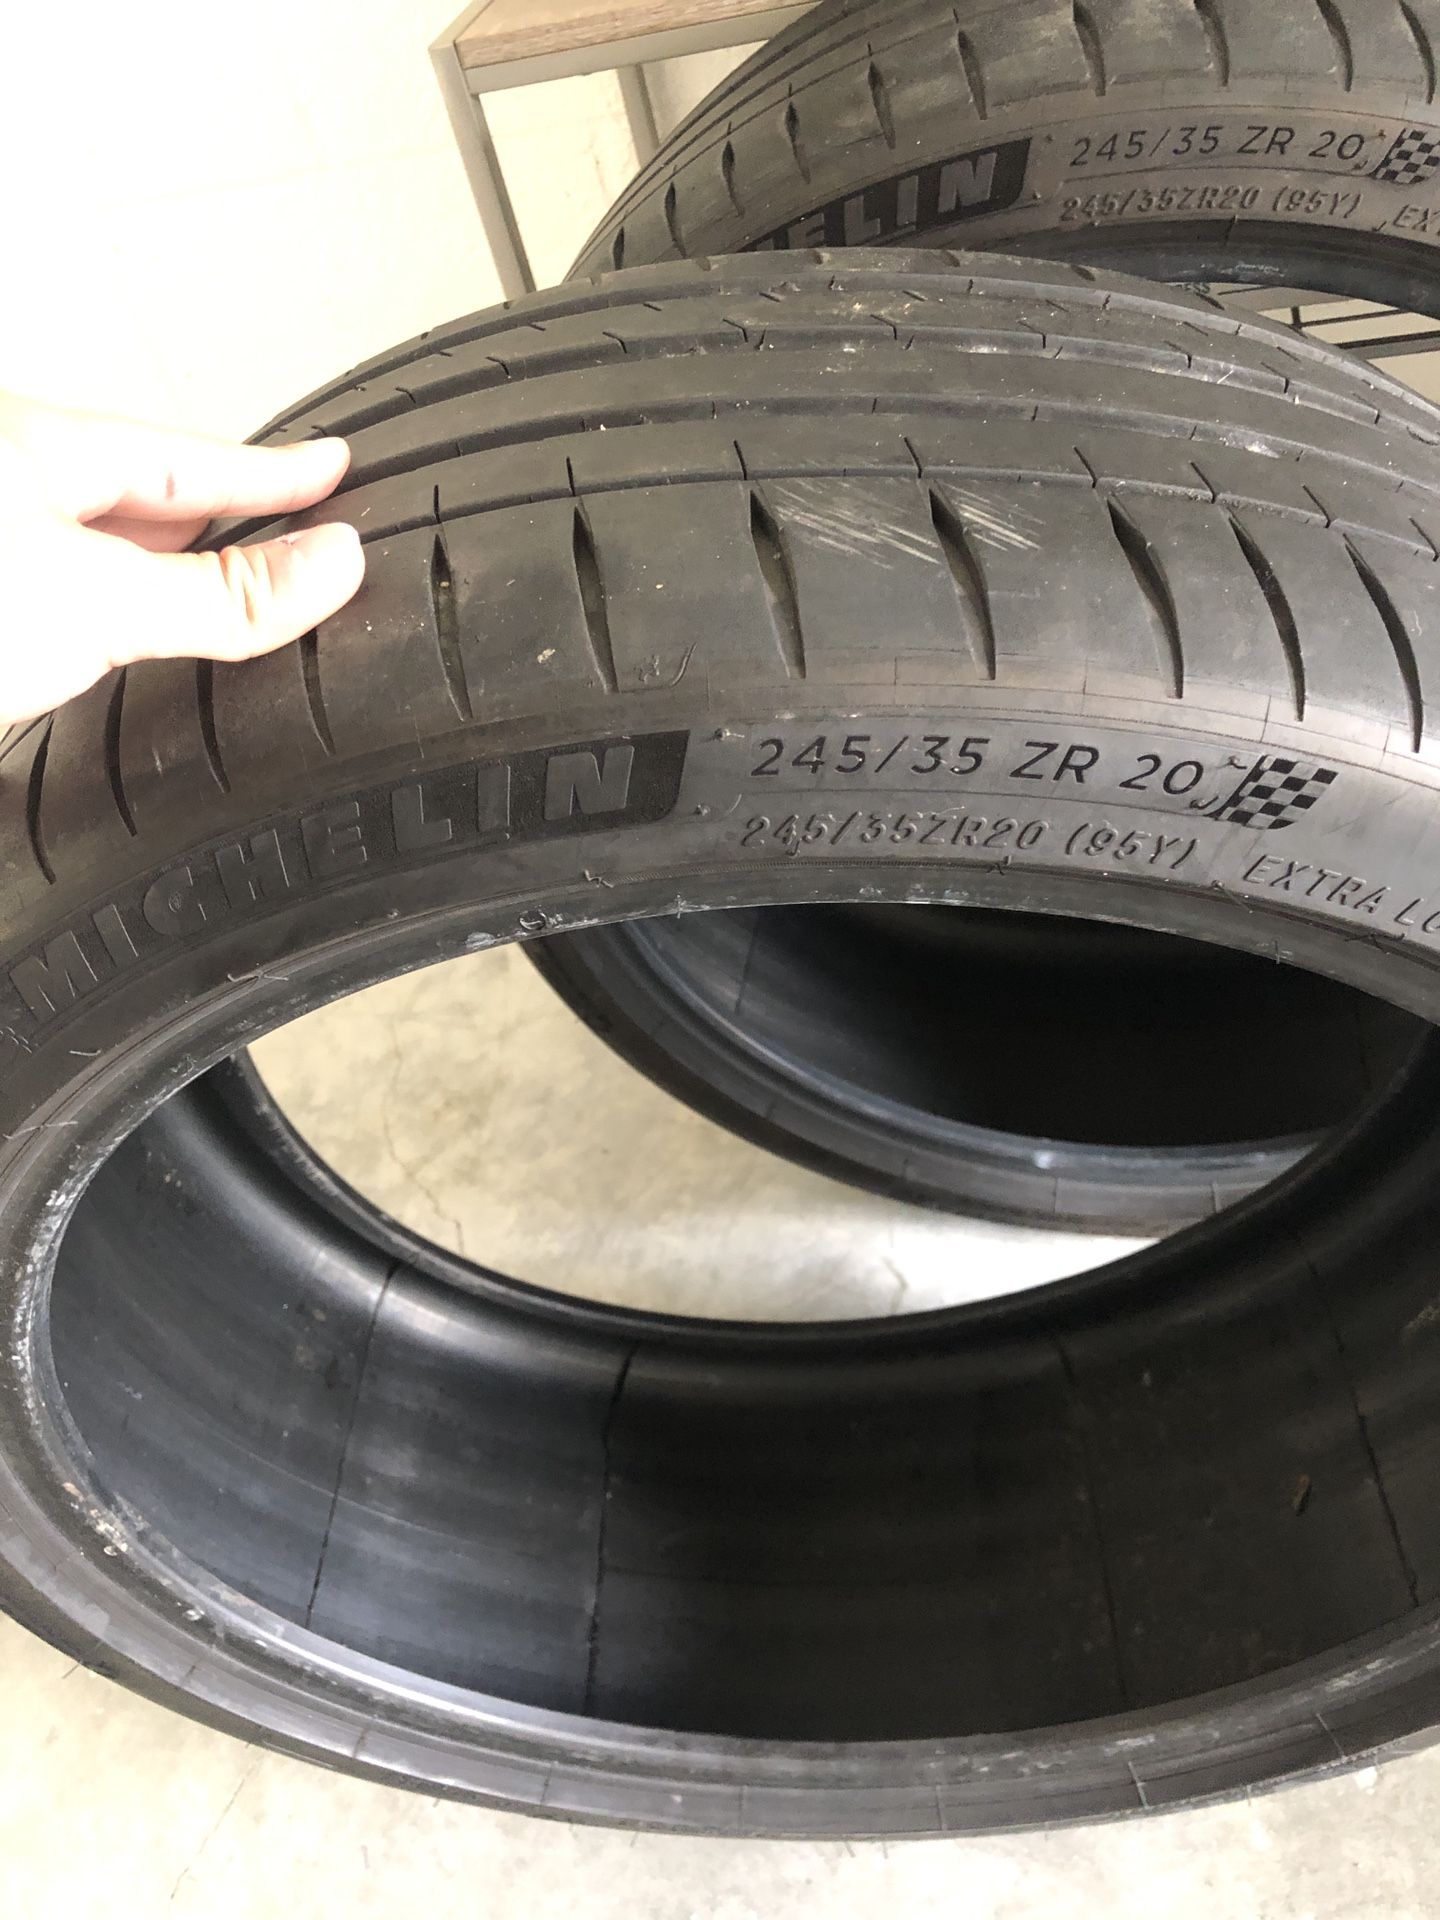 X2 - 245/35/20 Michelin tires